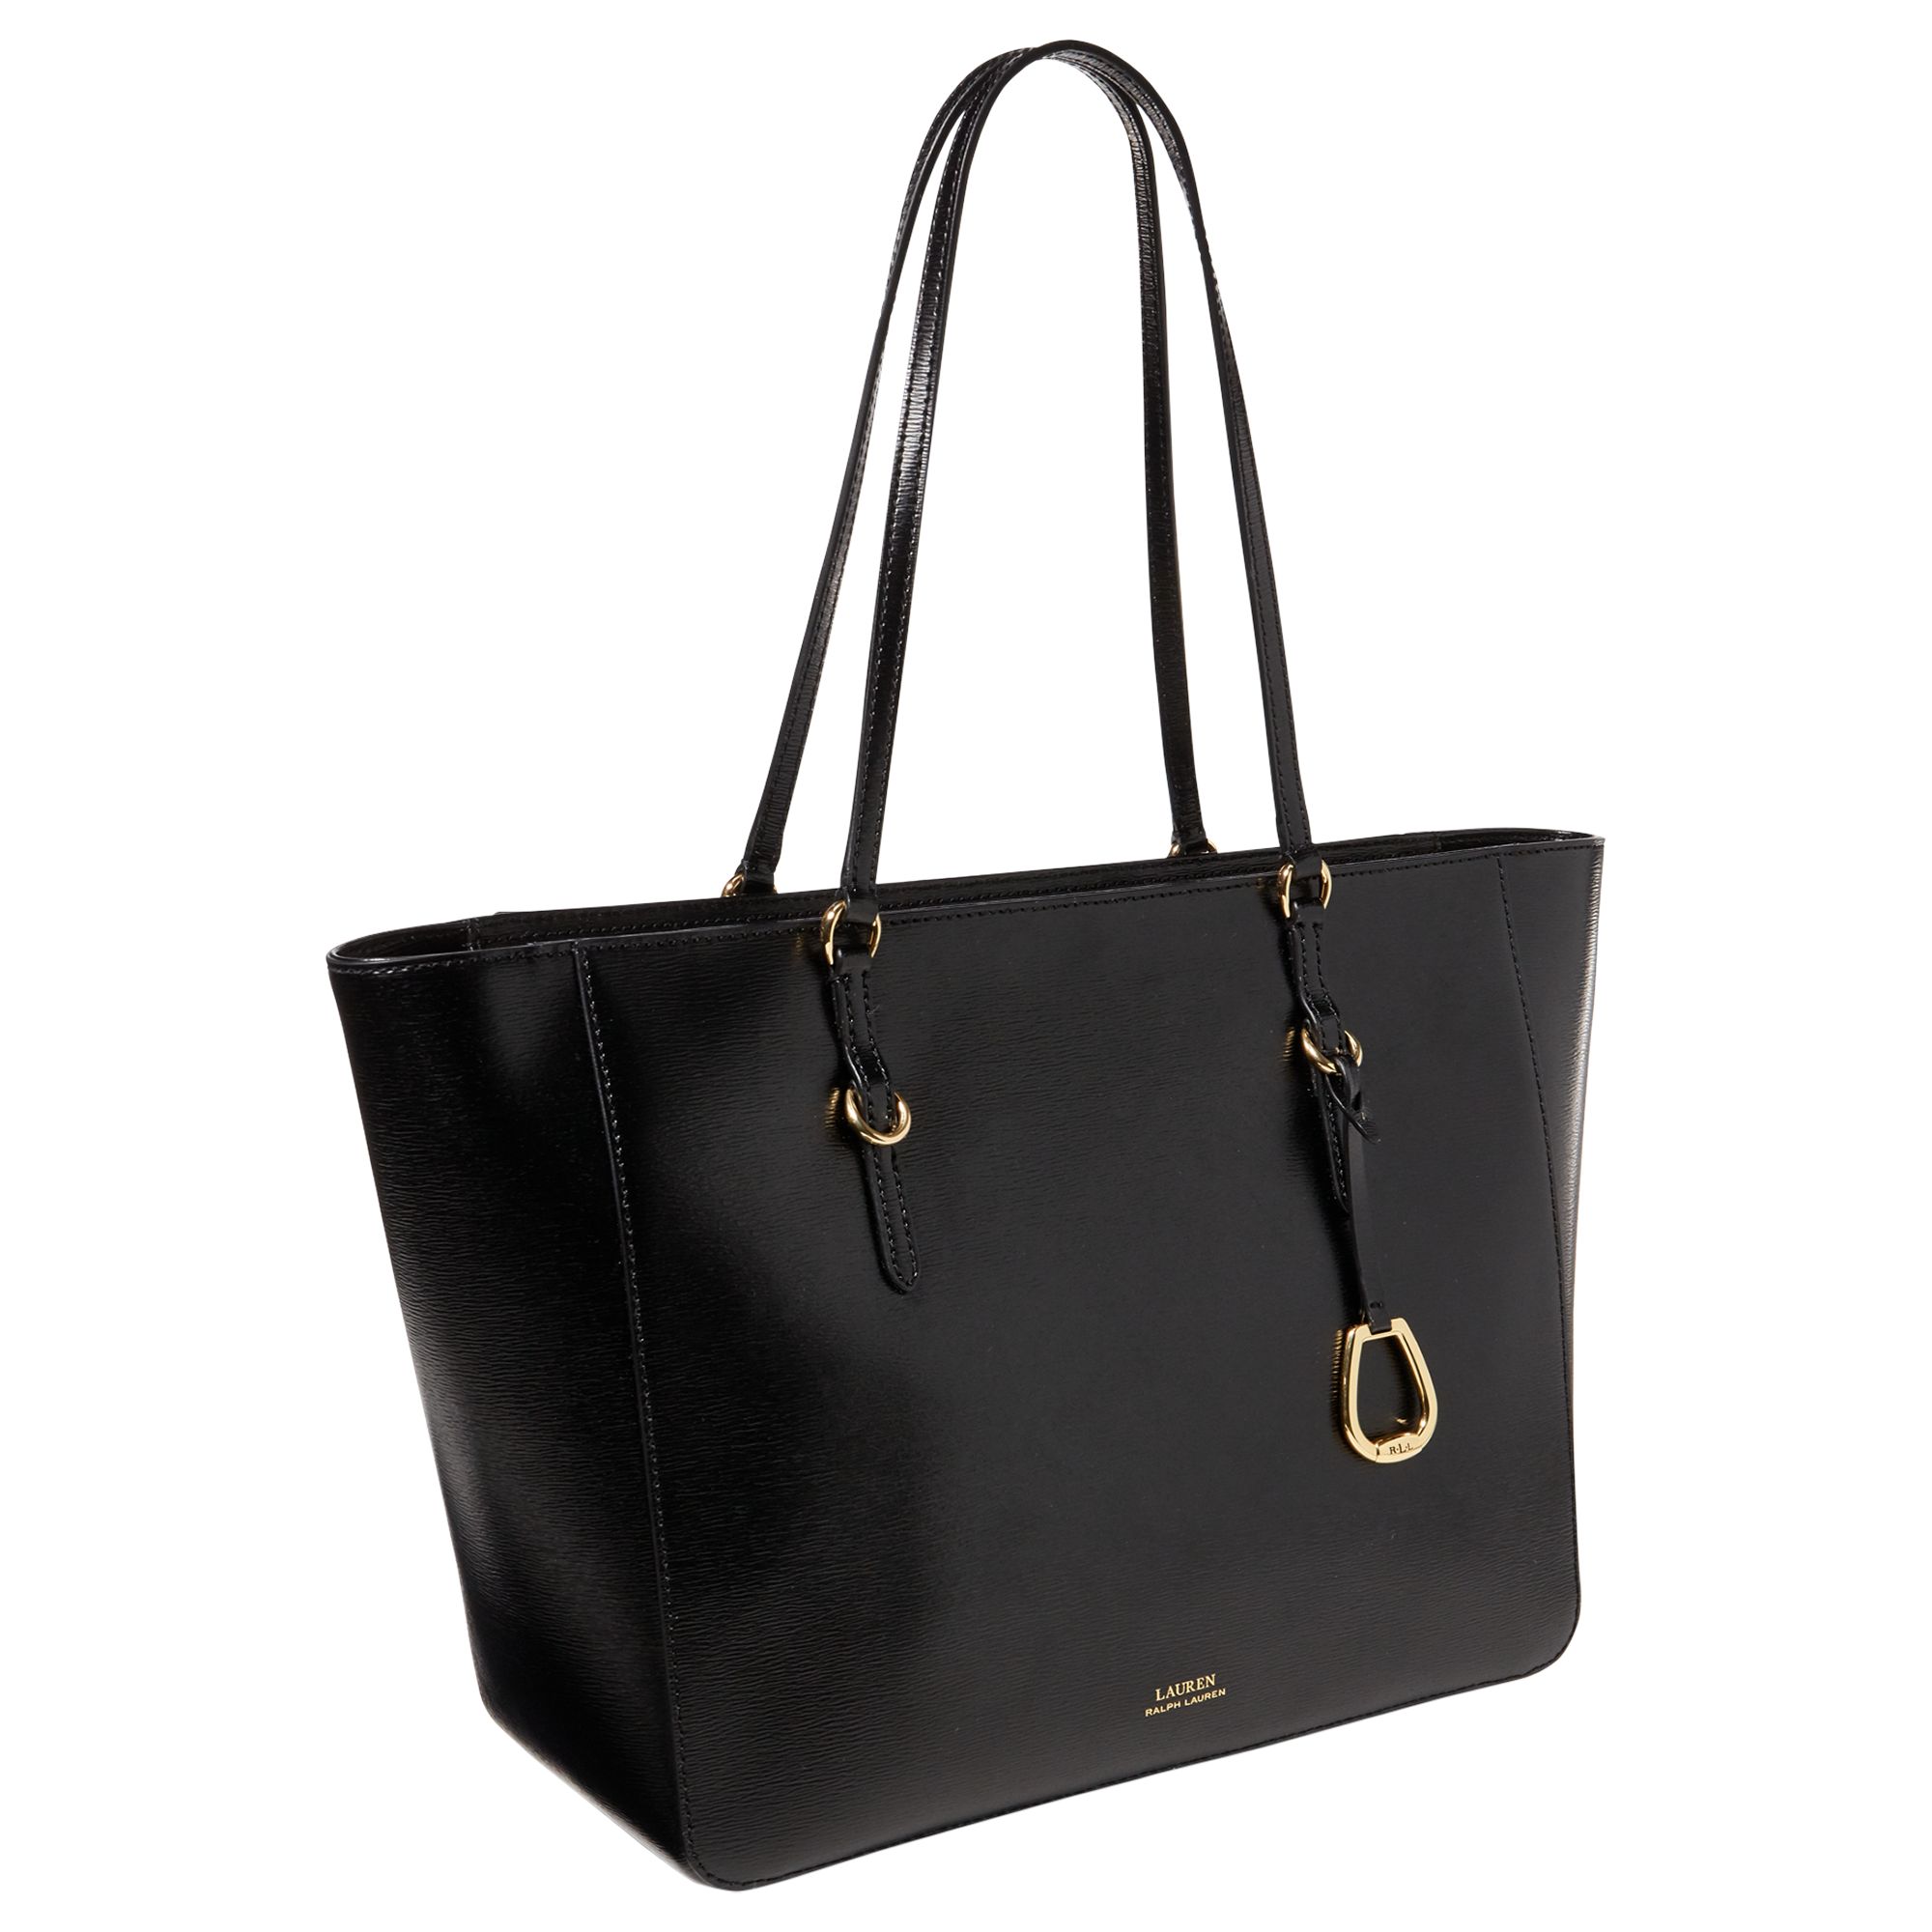 Lauren Ralph Lauren Saffiano Leather Tote Bag, Black at John Lewis ...